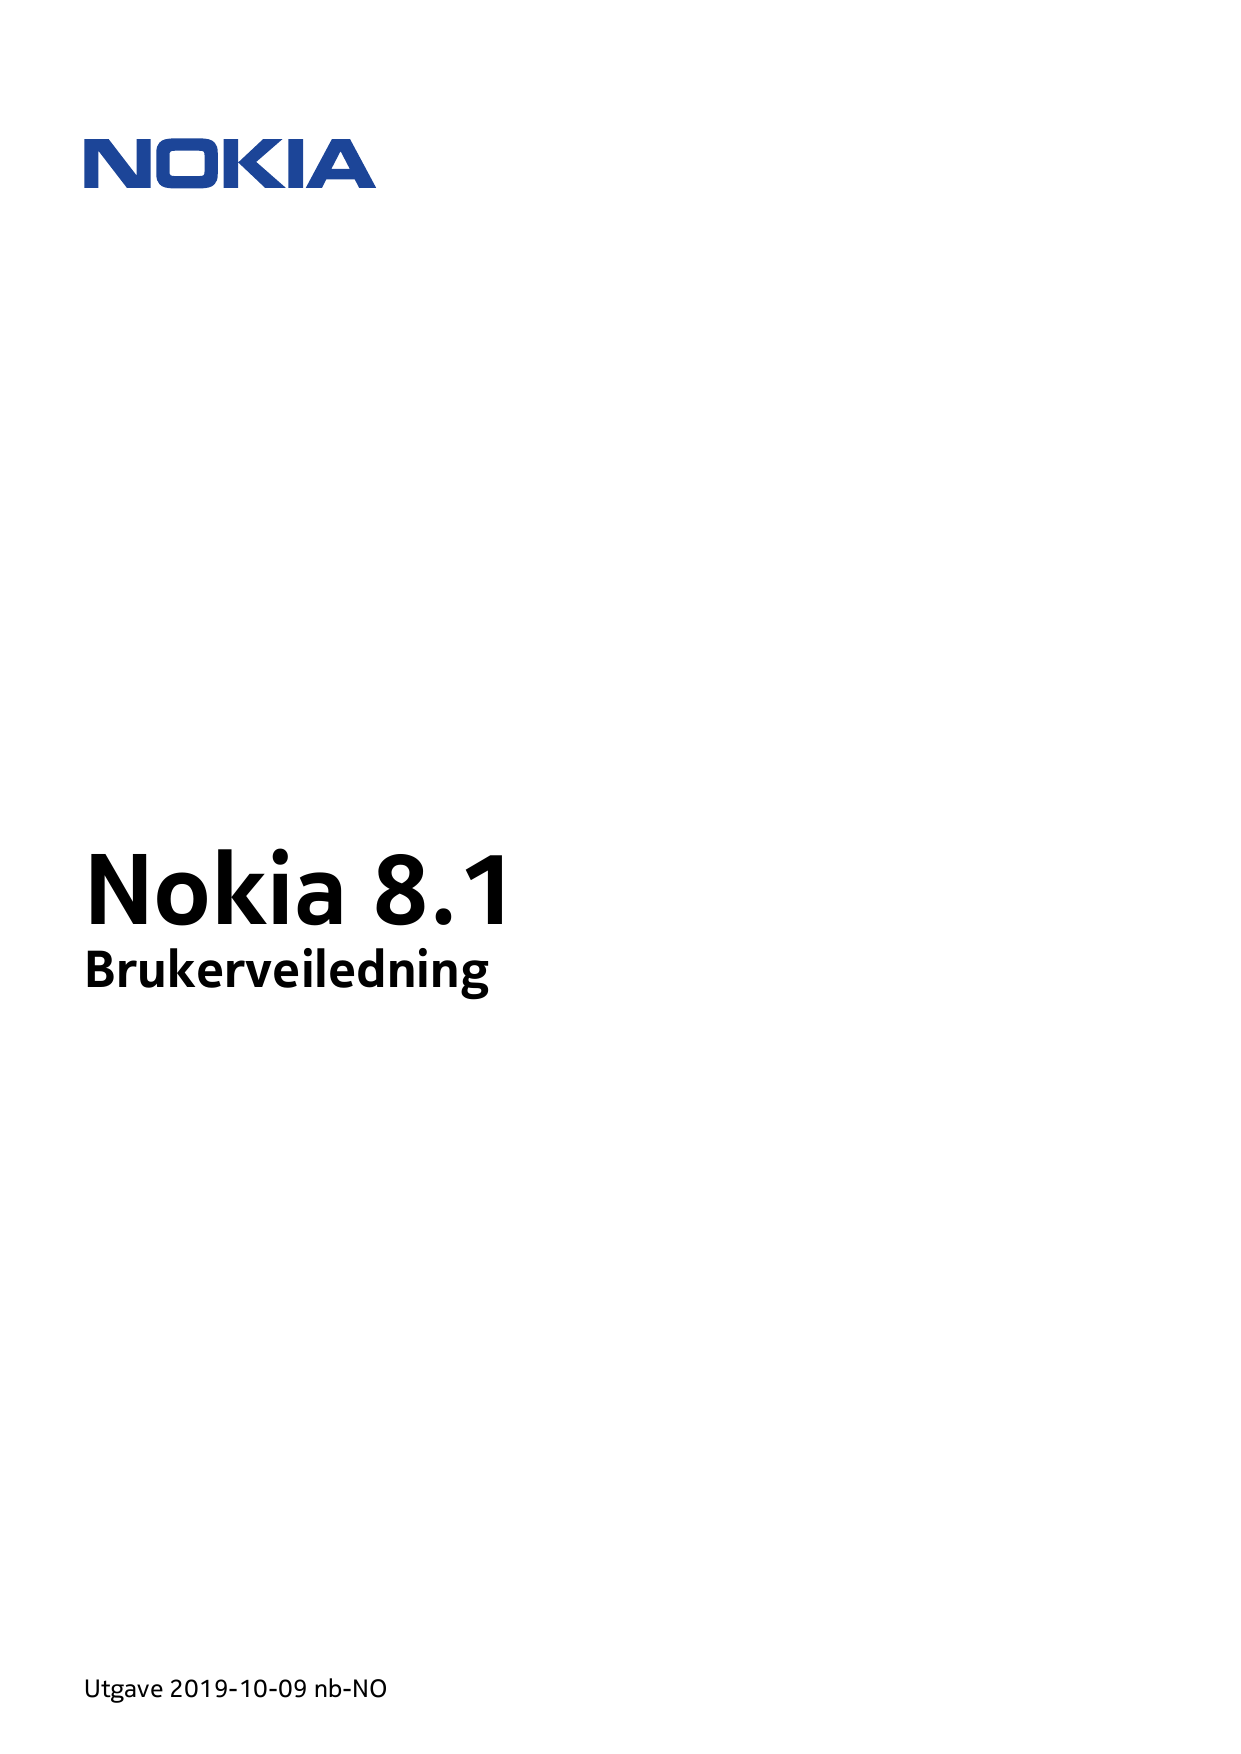 Nokia 8.1BrukerveiledningUtgave 2019-10-09 nb-NO